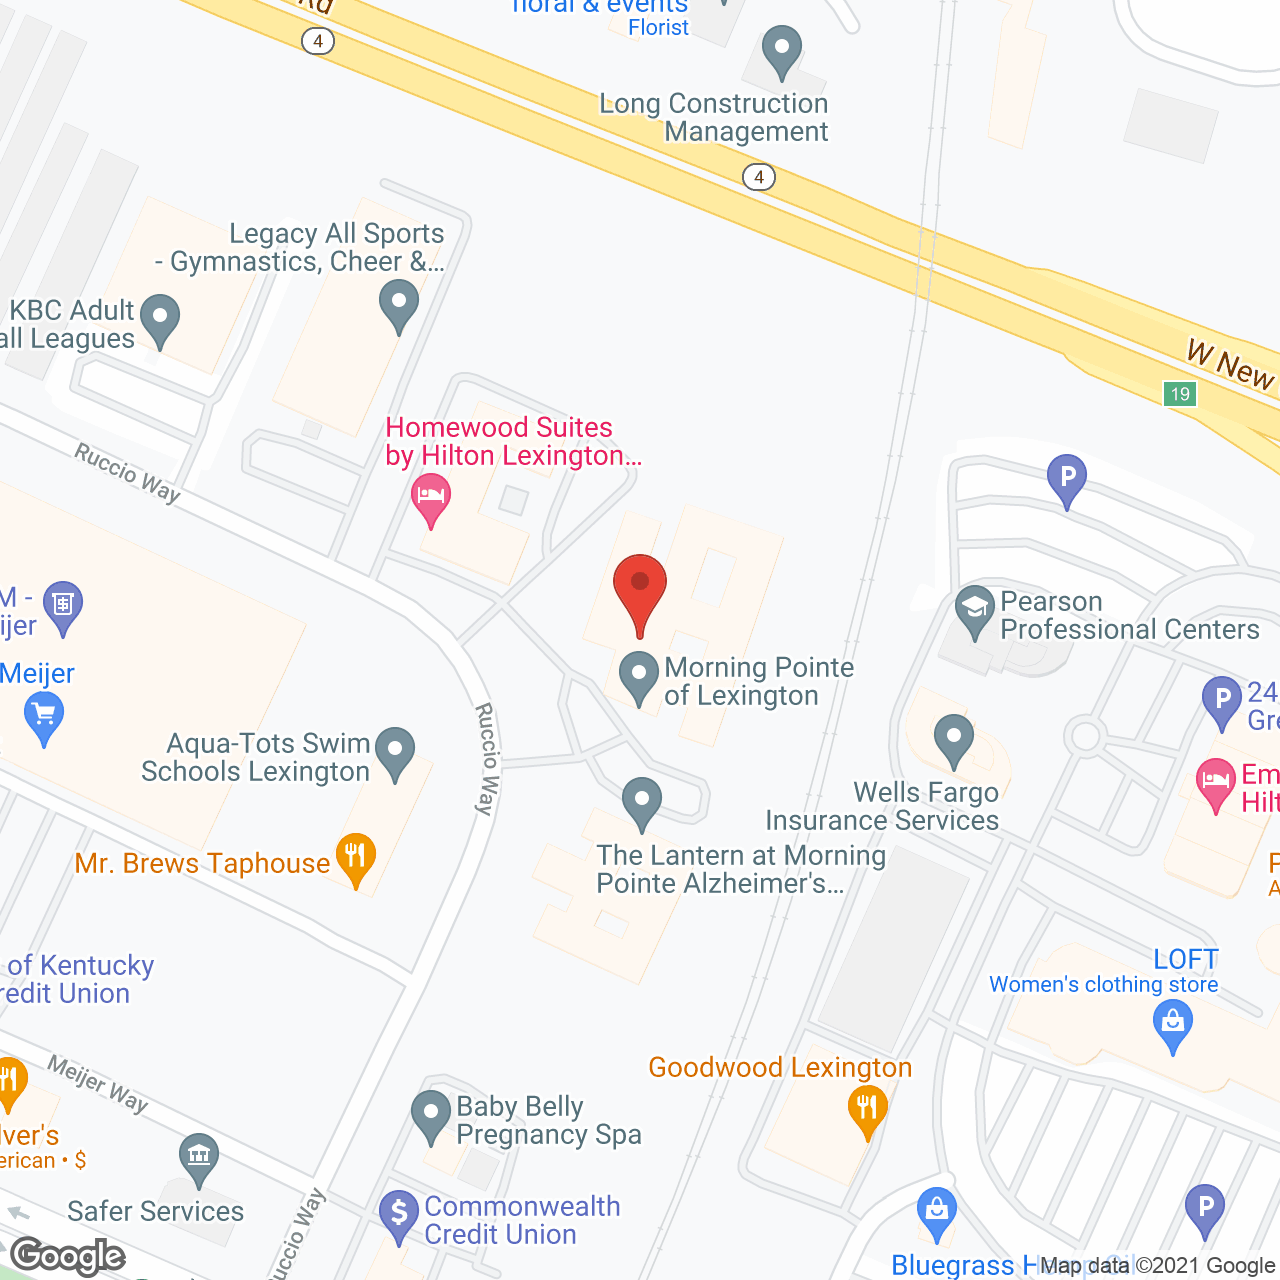 Morning Pointe of Lexington in google map